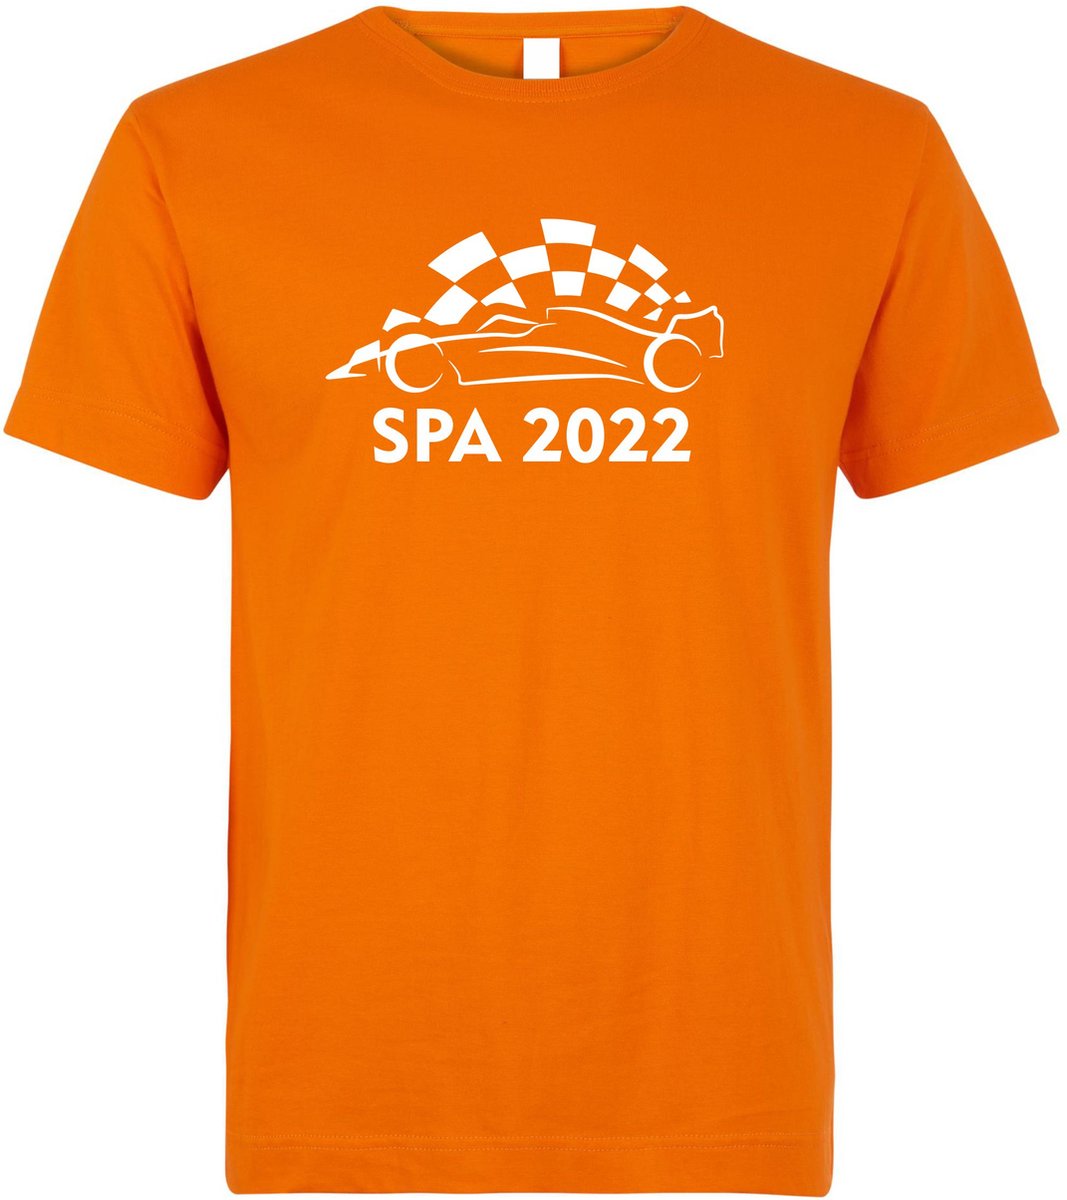 T-shirt Spa 2022 met raceauto | Max Verstappen / Red Bull Racing / Formule 1 fan | Grand Prix Circuit Spa-Francorchamps | kleding shirt | Oranje | maat S